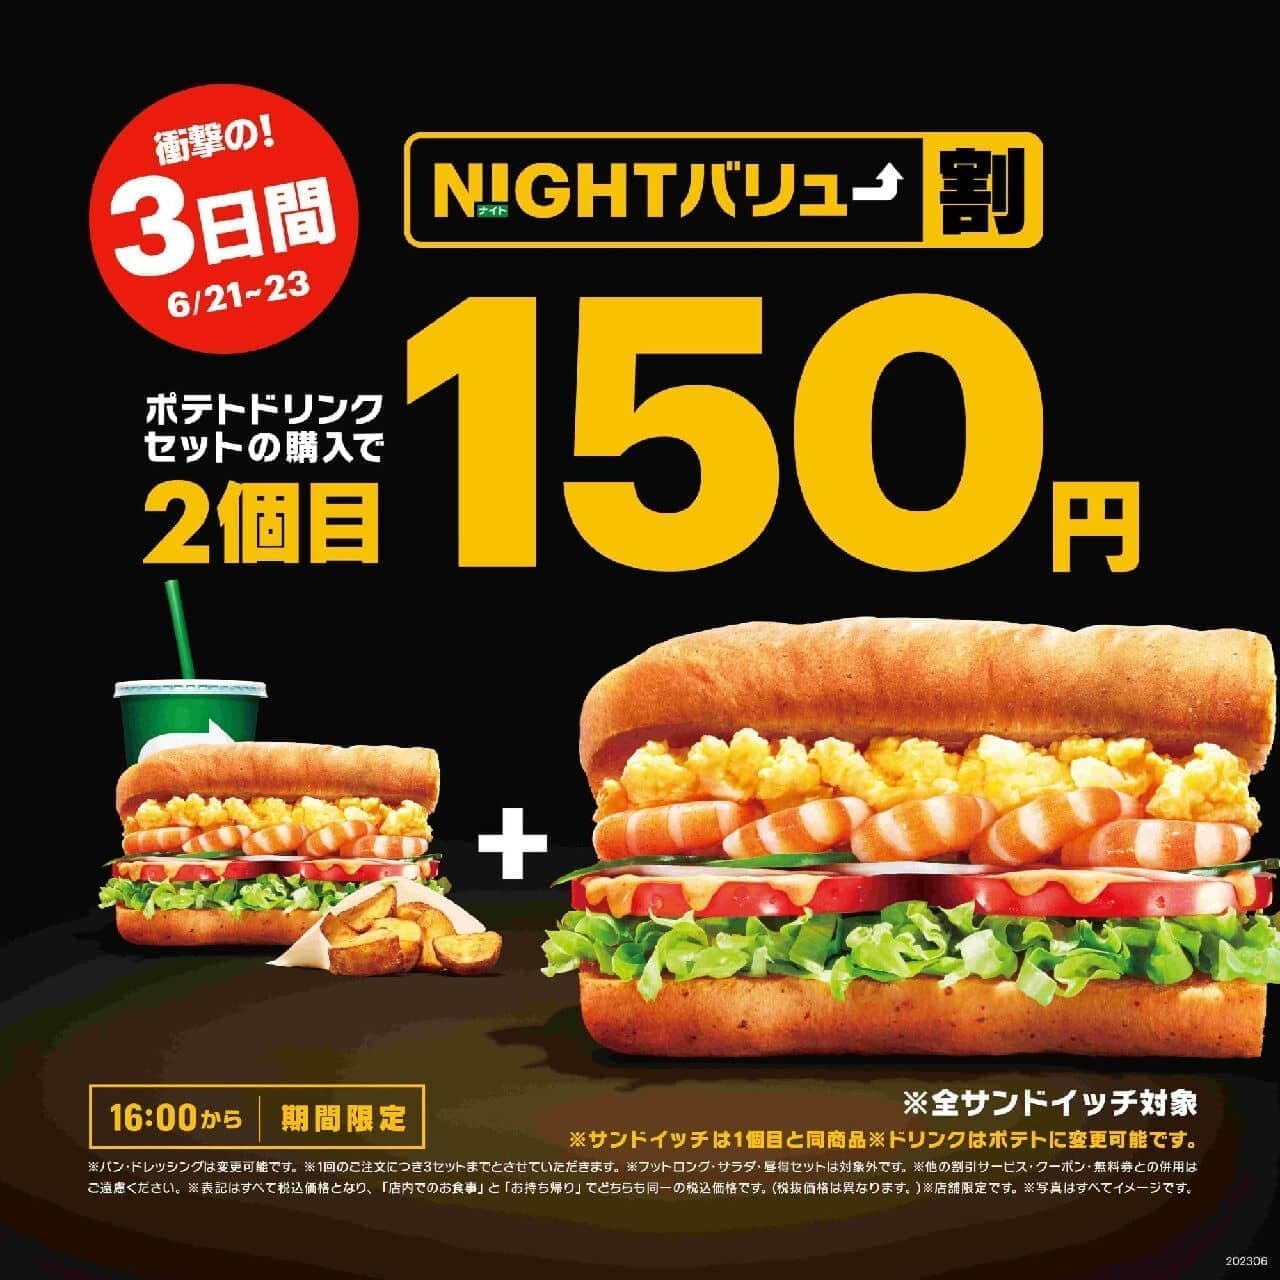 Subway "NIGHT Value" 1st Anniversary Campaign